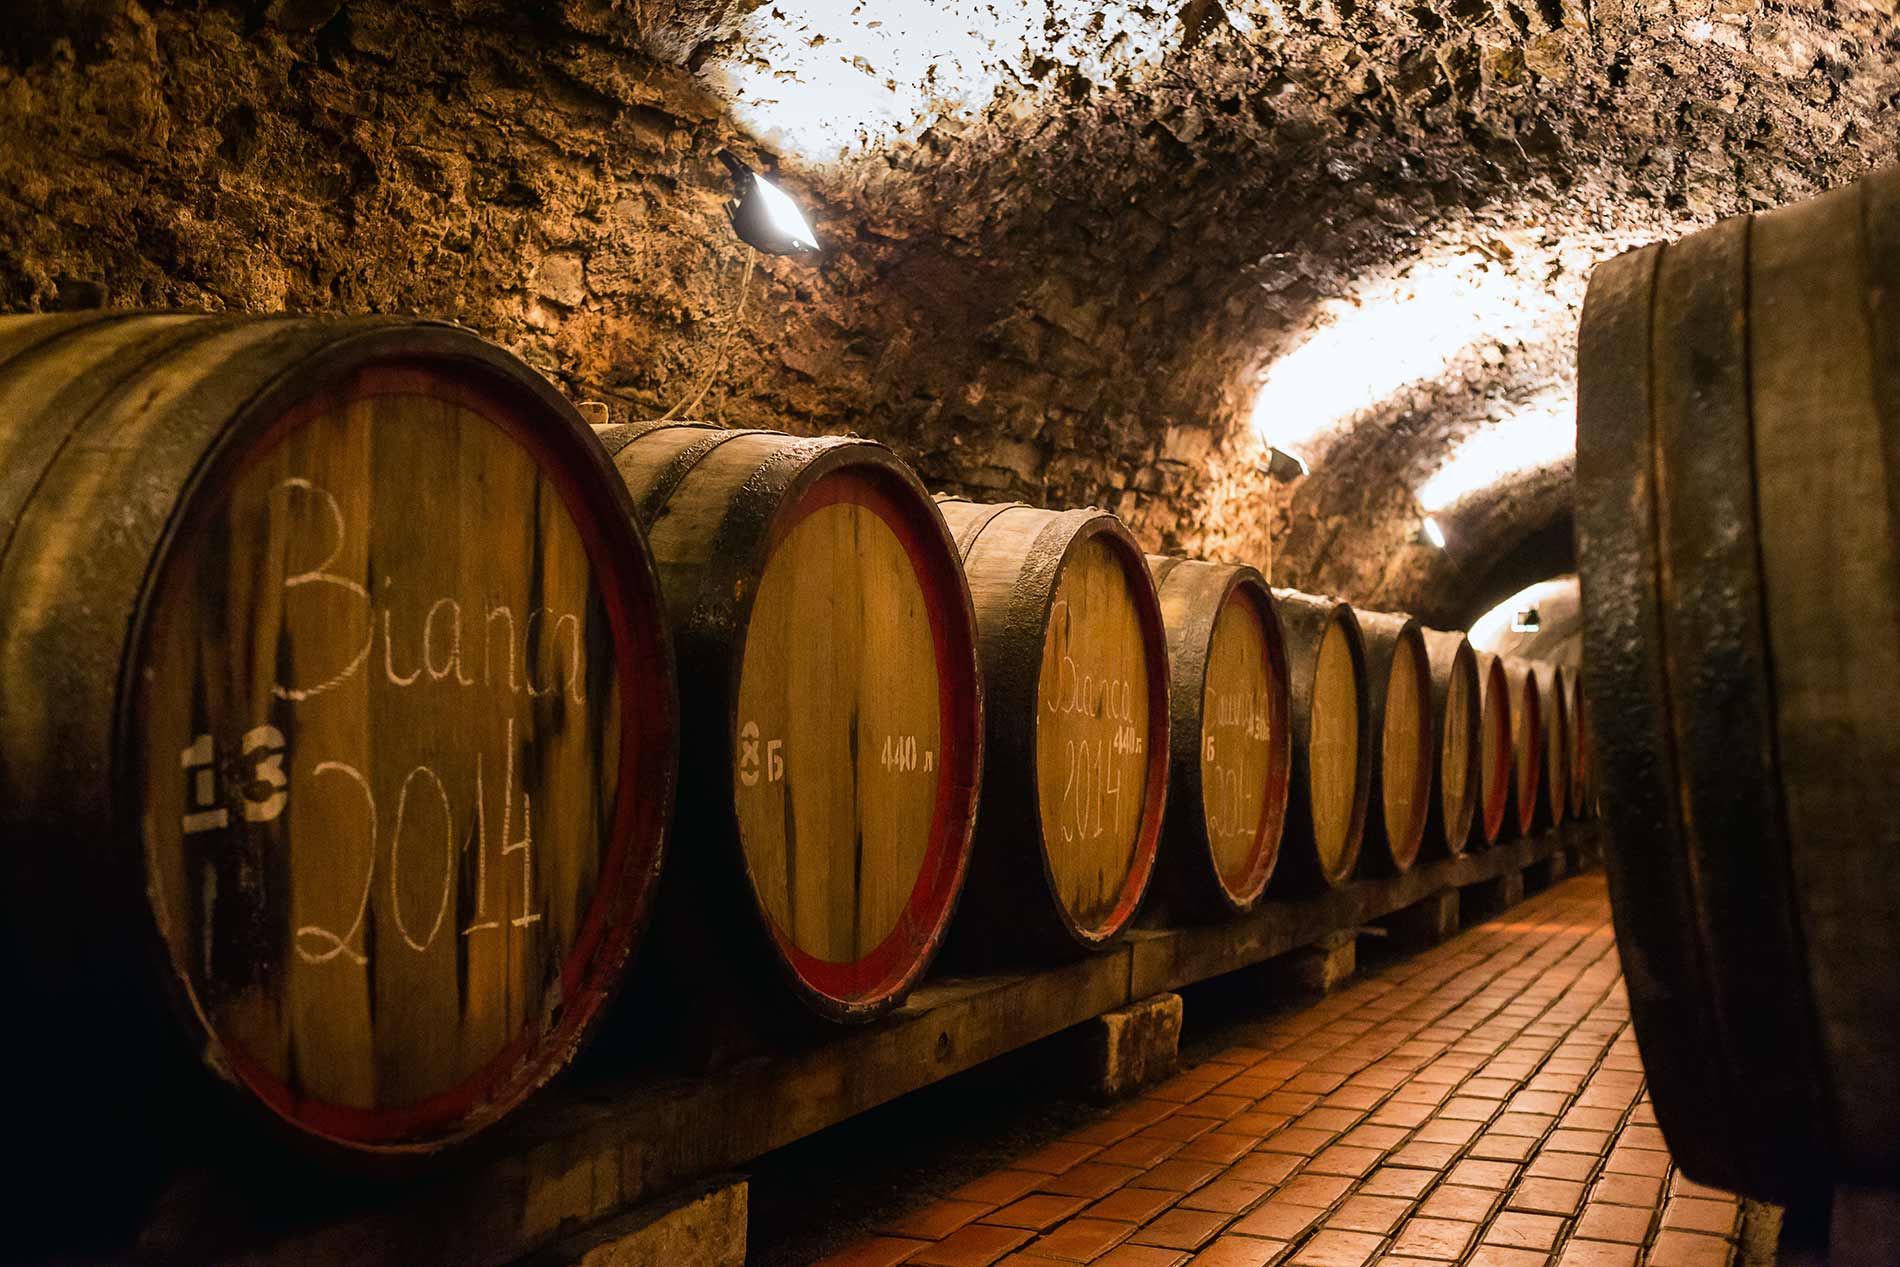 Whisky barrels in cellar